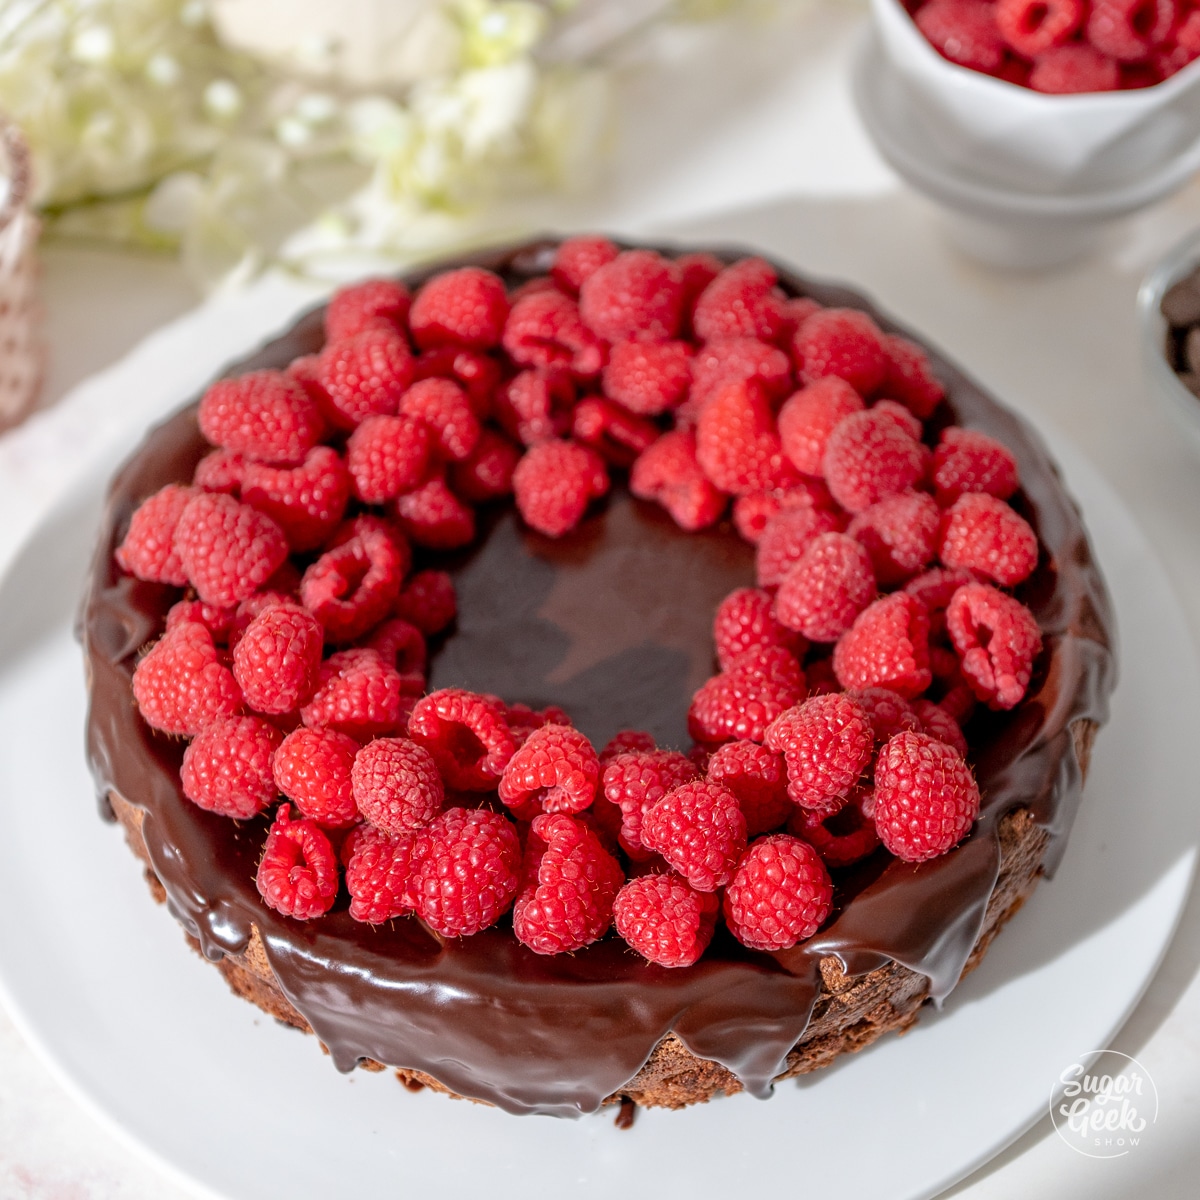 flourless chocolate cake with raspberries on top